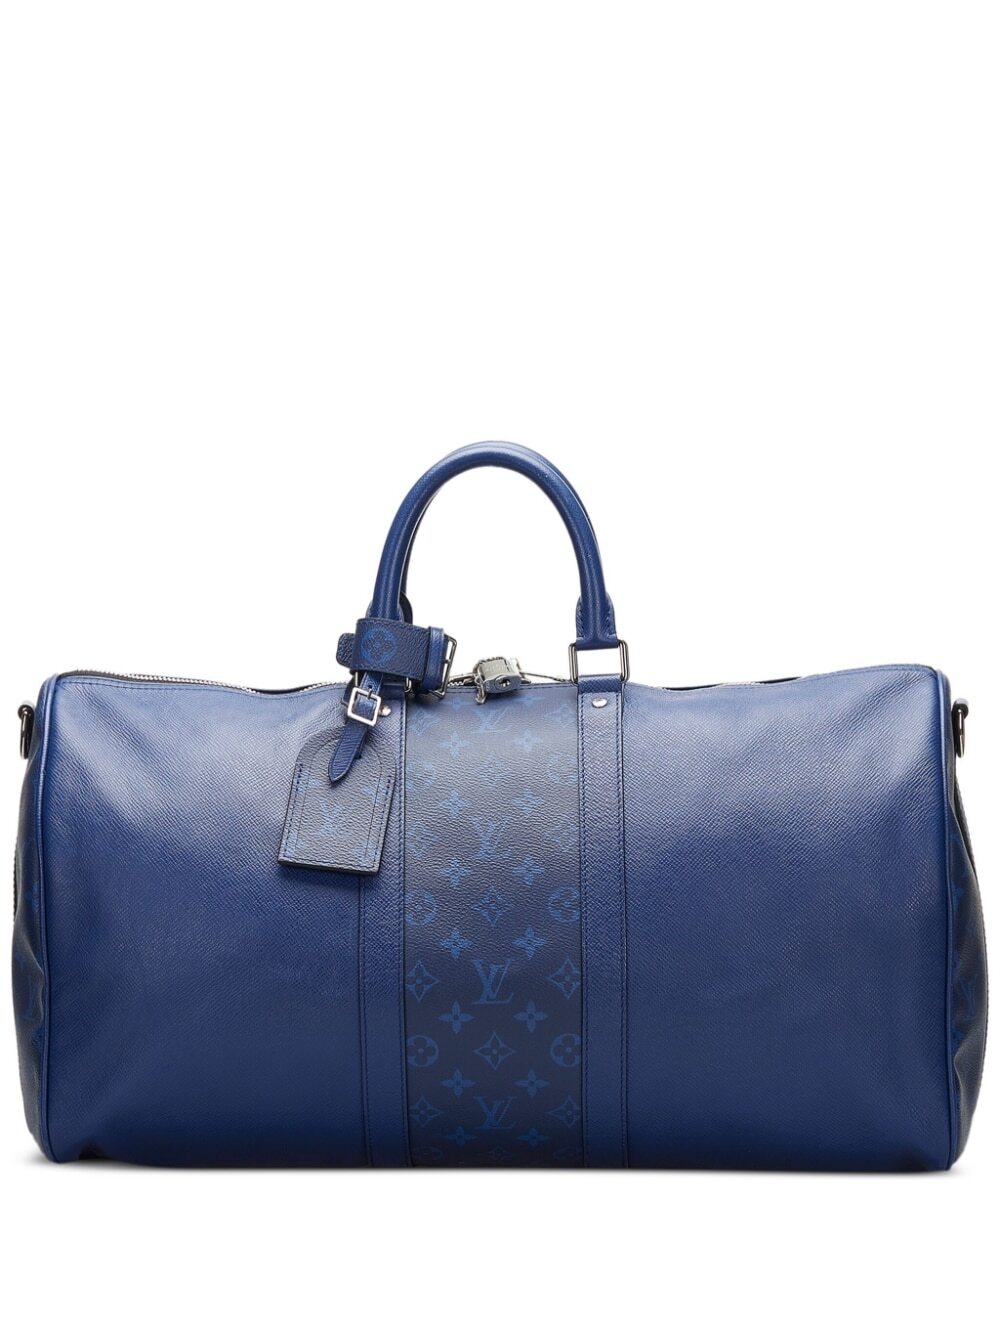 Louis Vuitton pre-owned Keepall Bandoulière 50 duffle bag - Blue